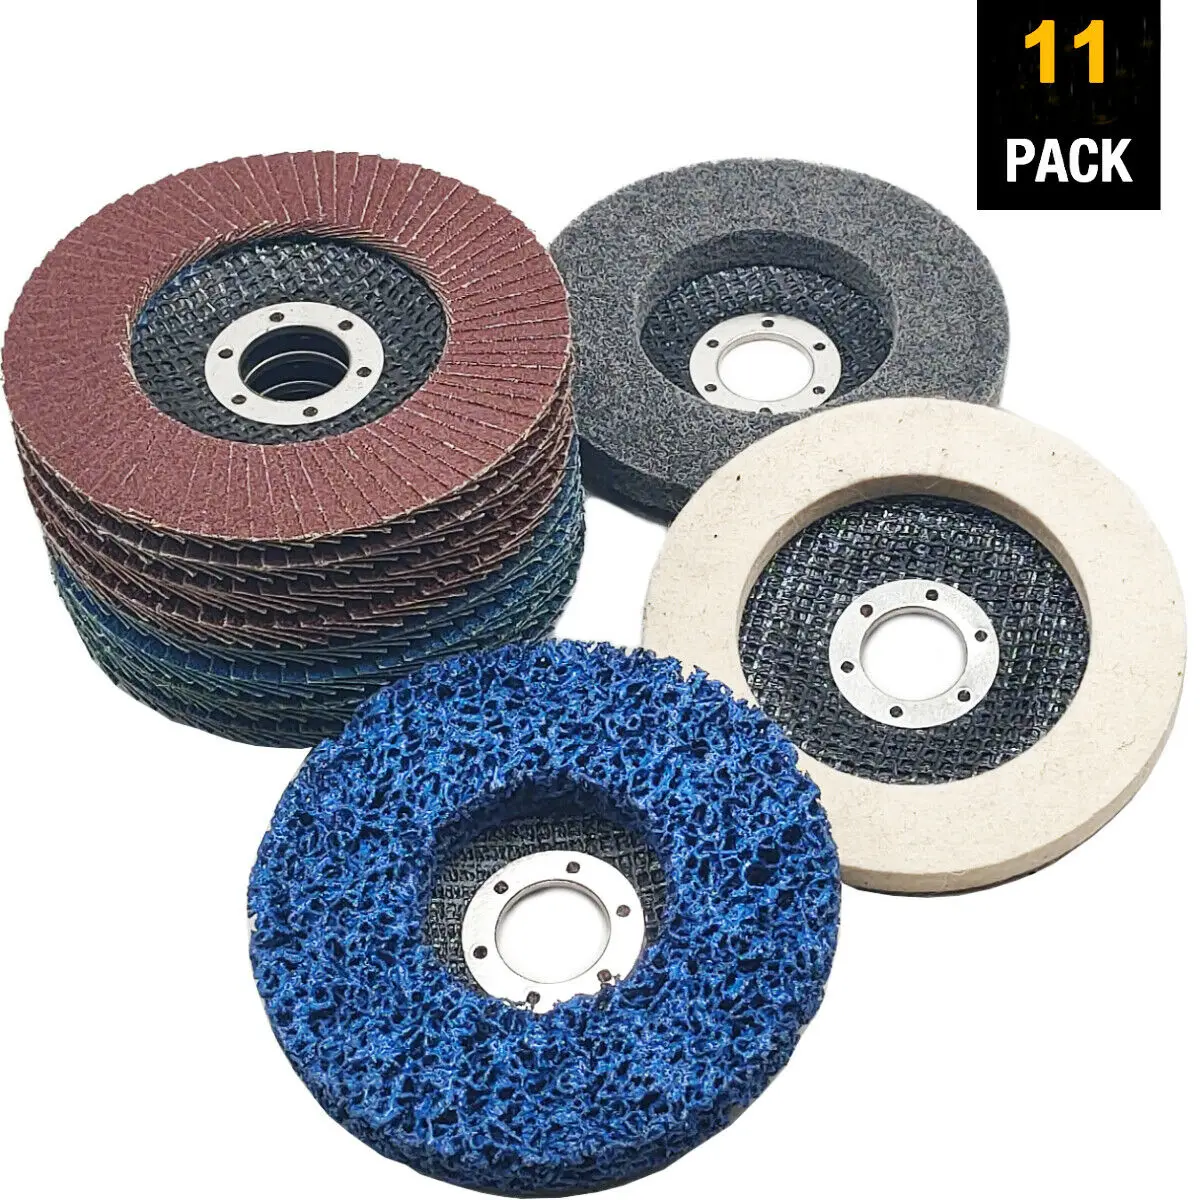 11Pack 4.5Inch Sanding Flap Discs Polishing Grinding Wheel Set for Angle Grinder